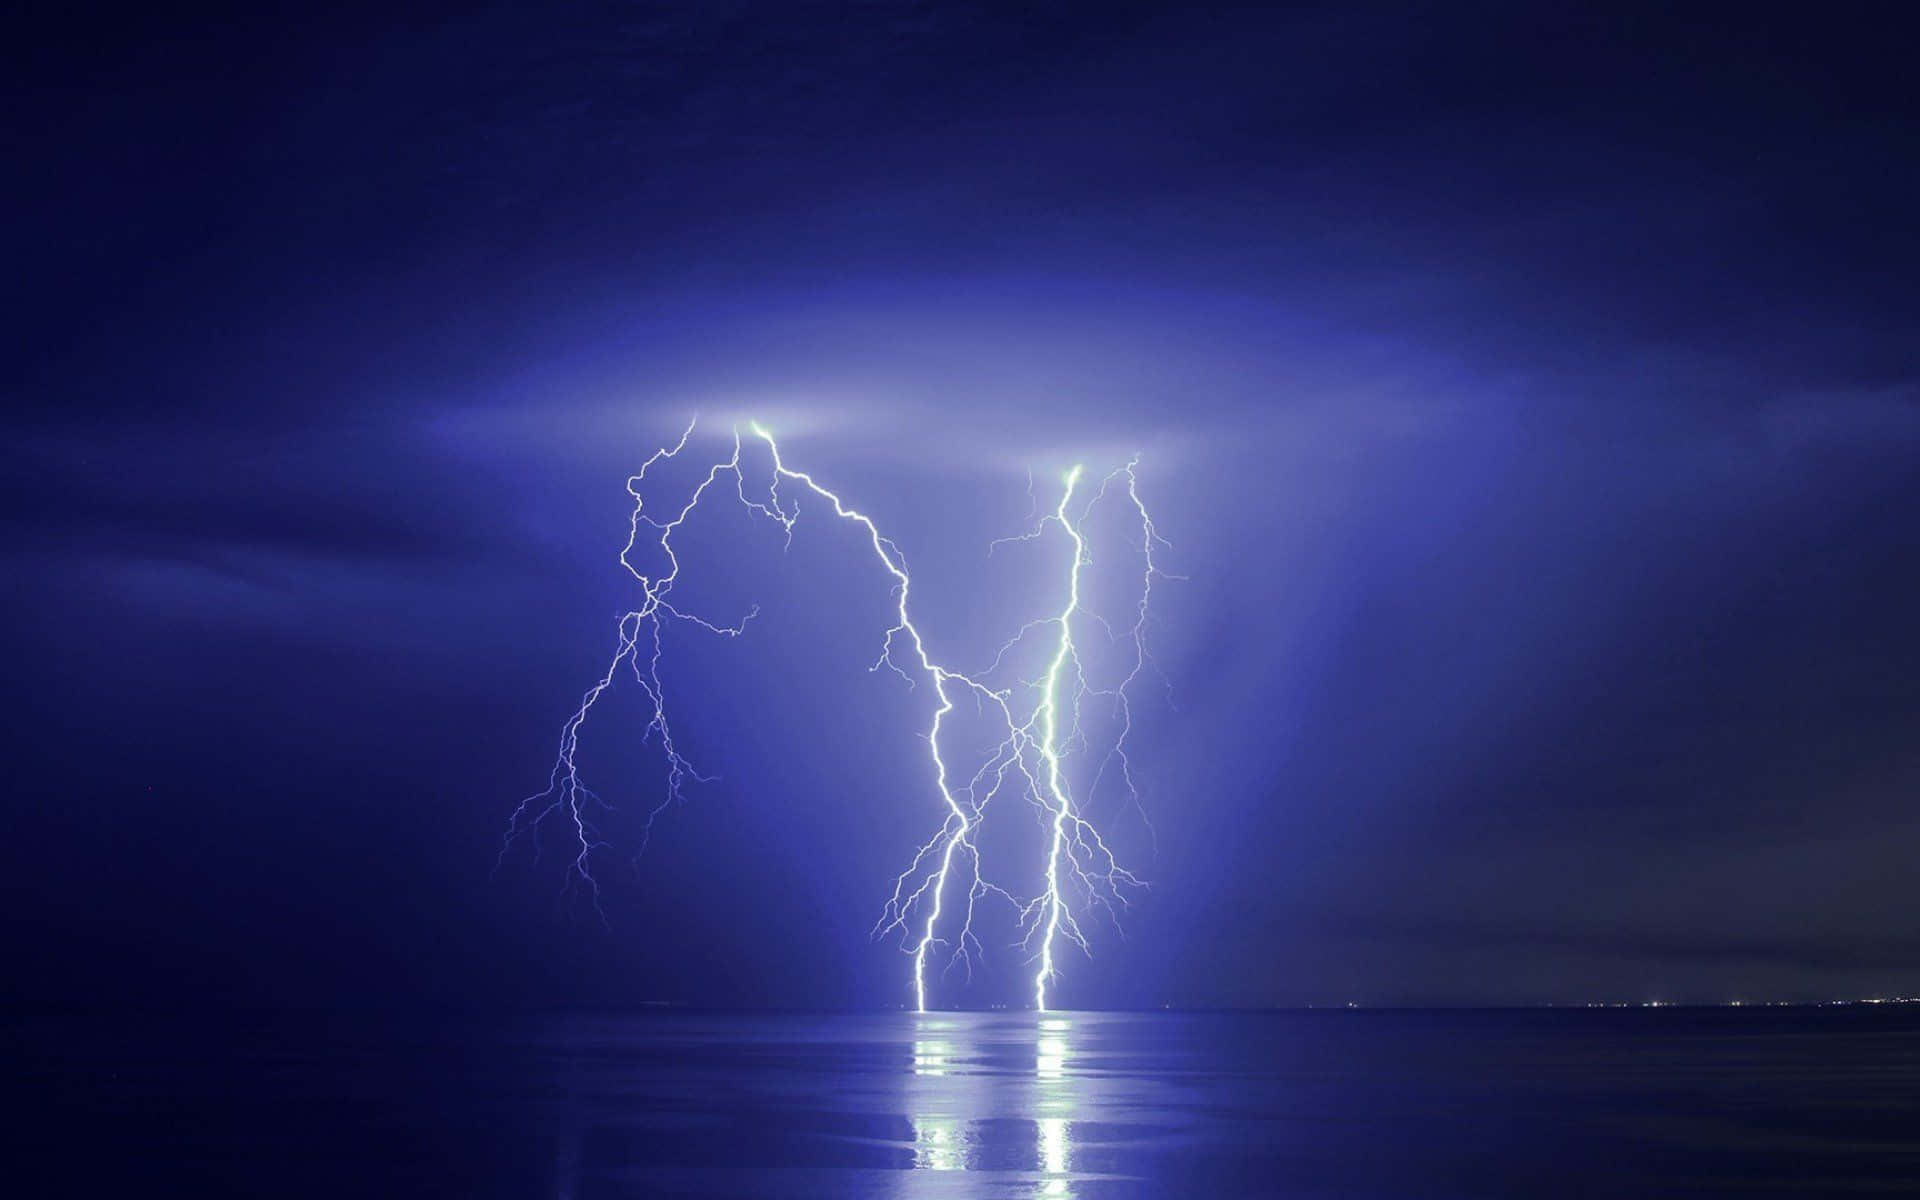 Lightning Strikes, Illuminating the Sky